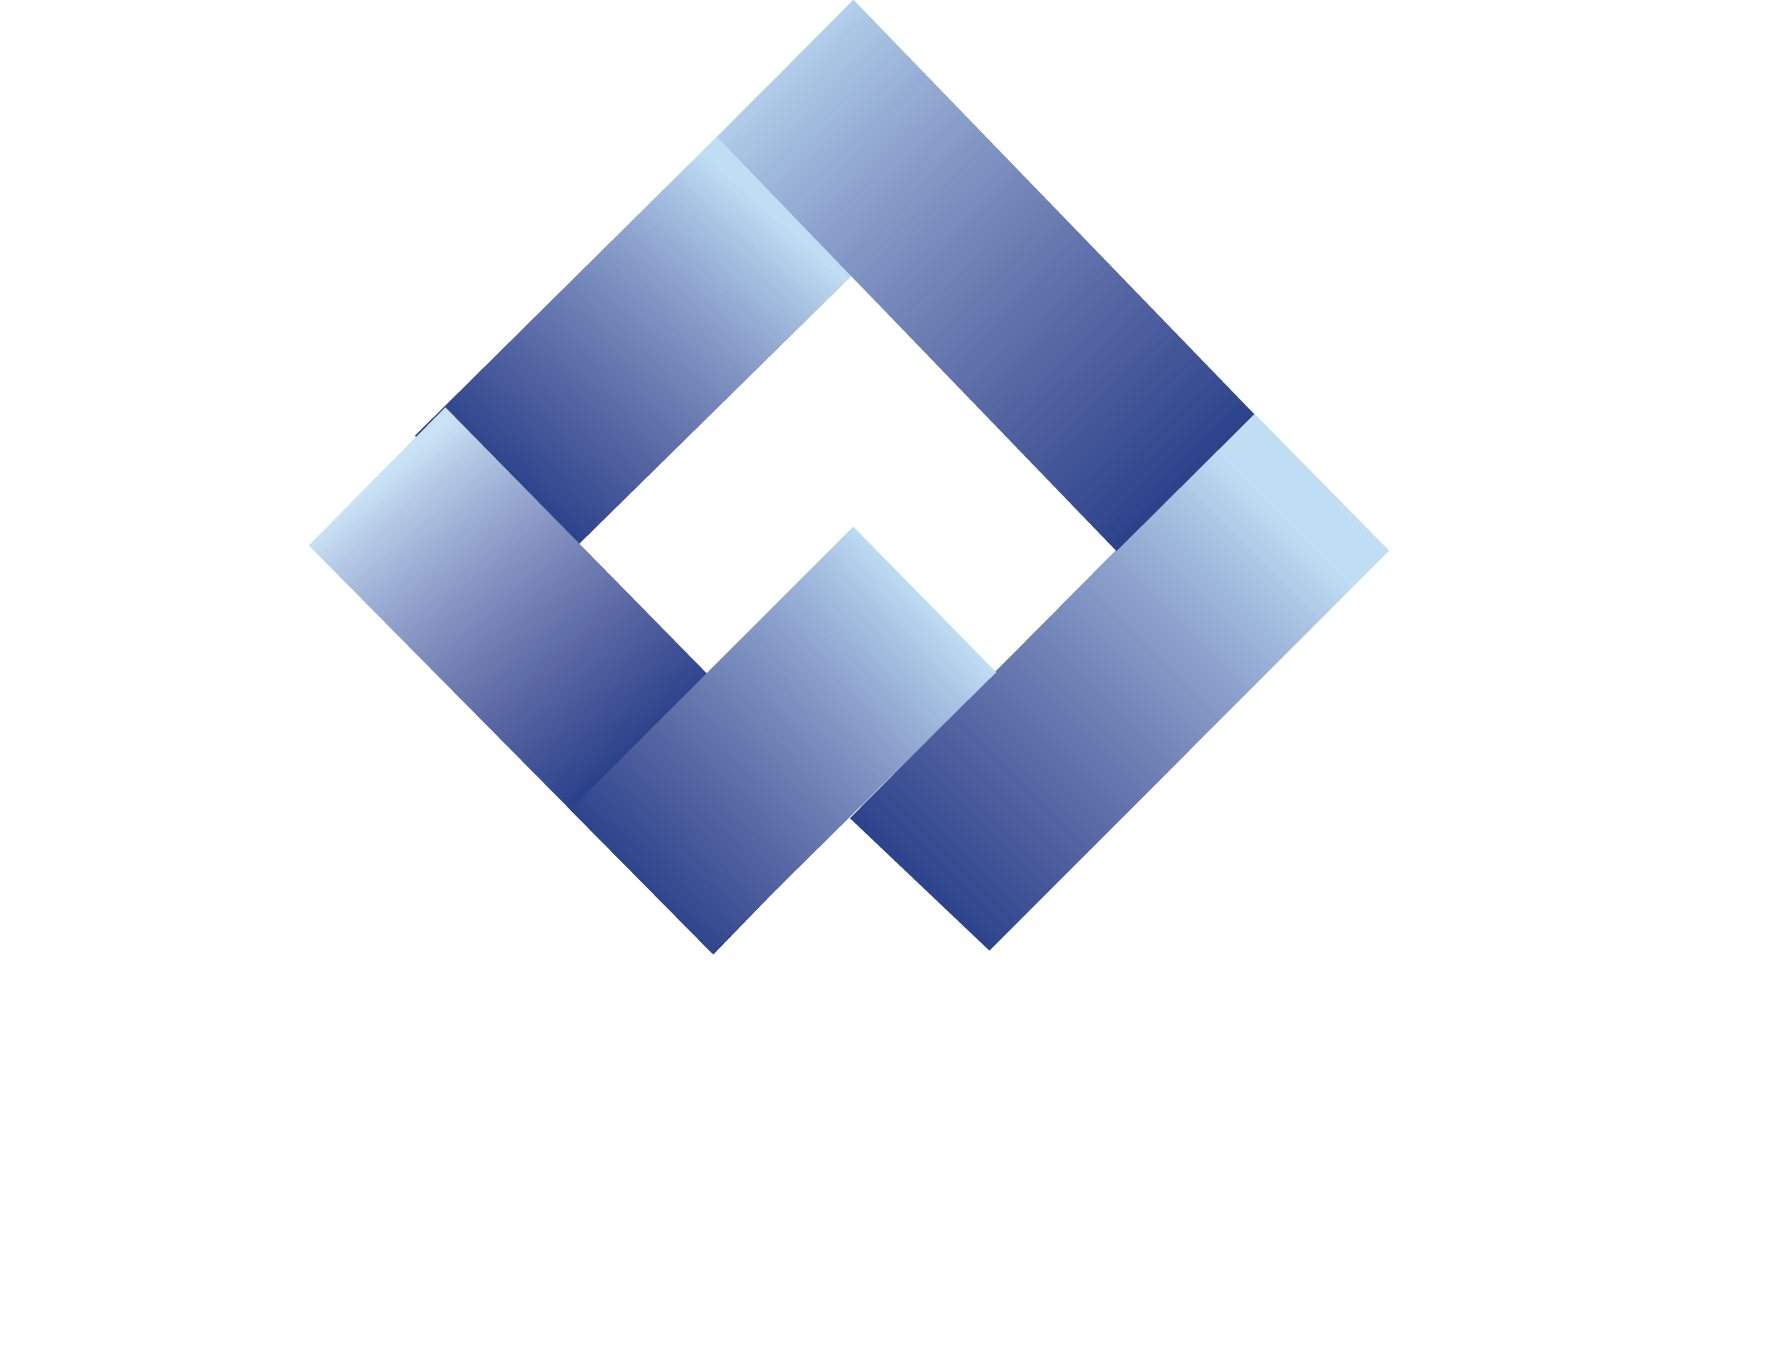 Financial Solutions Wealth Building Strategies